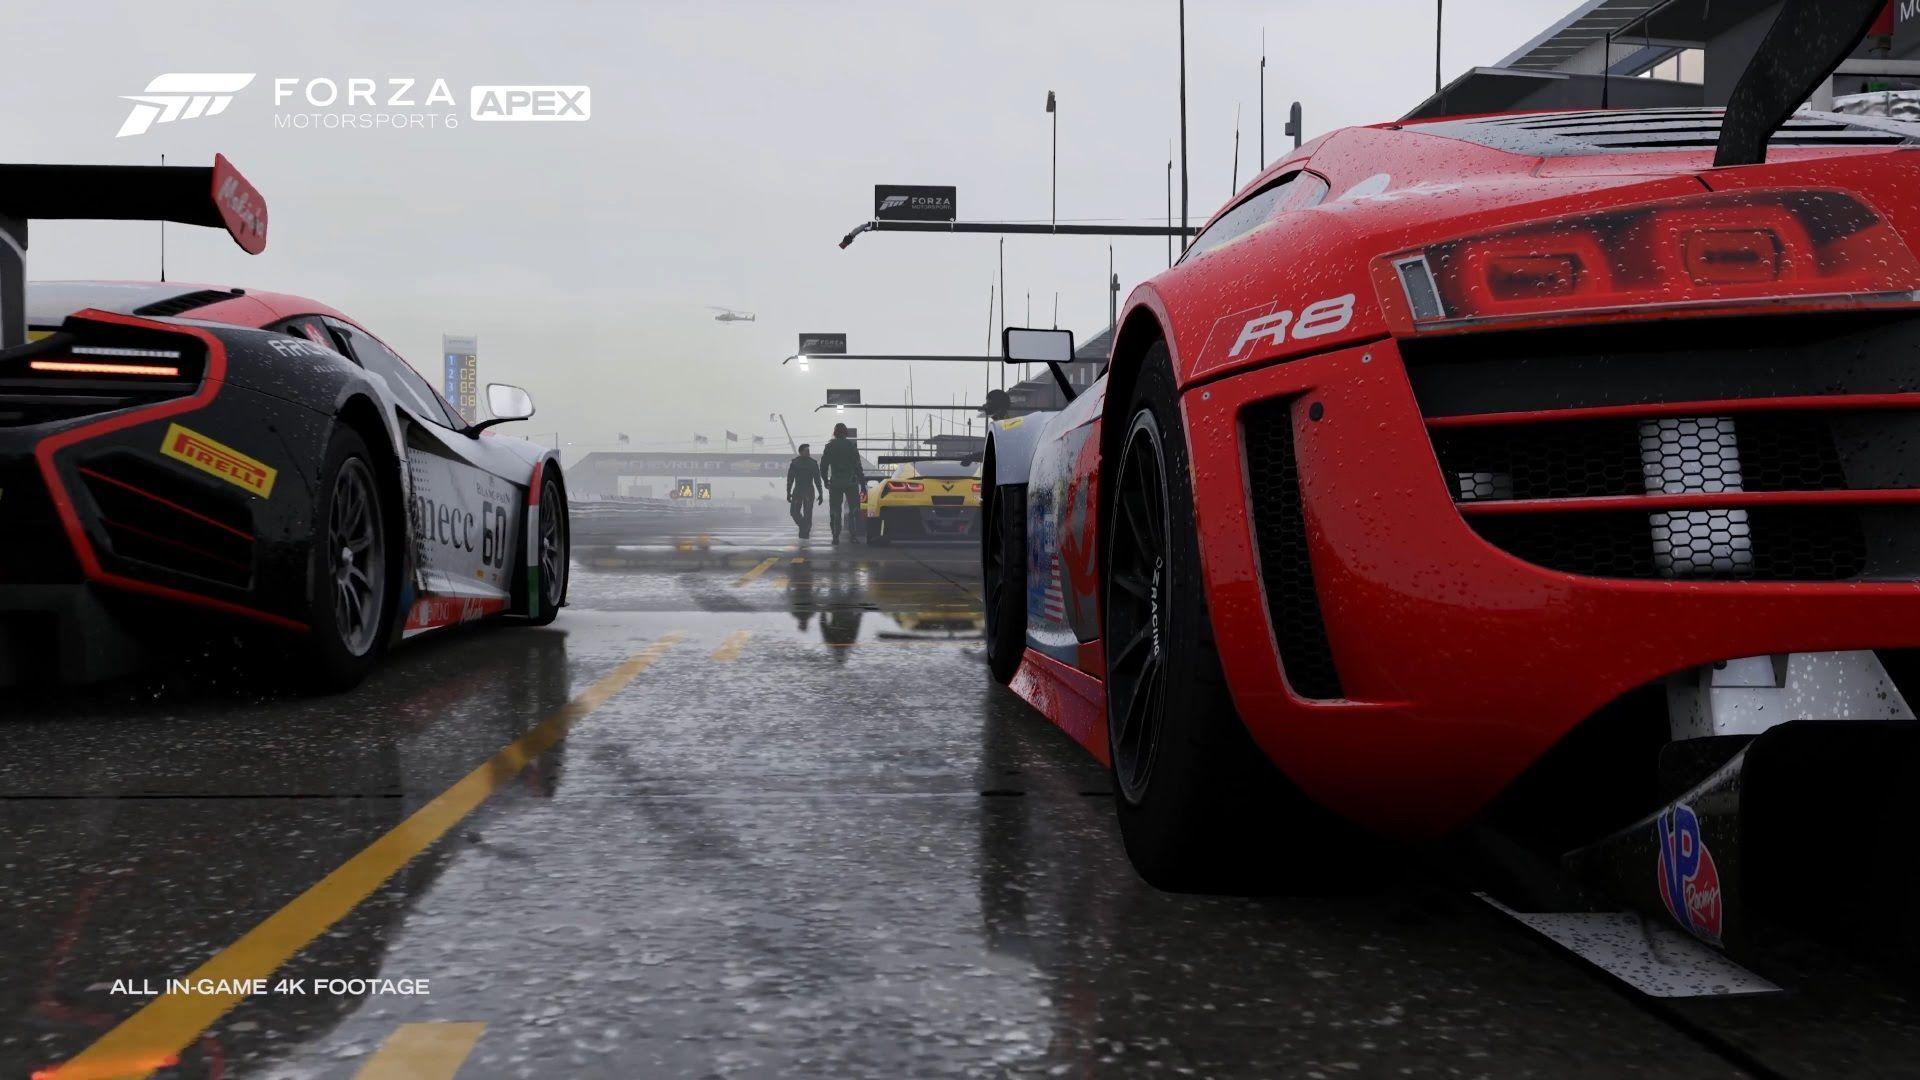 Forza Motorsport 6: Apex Computer Wallpaper, Desktop Background